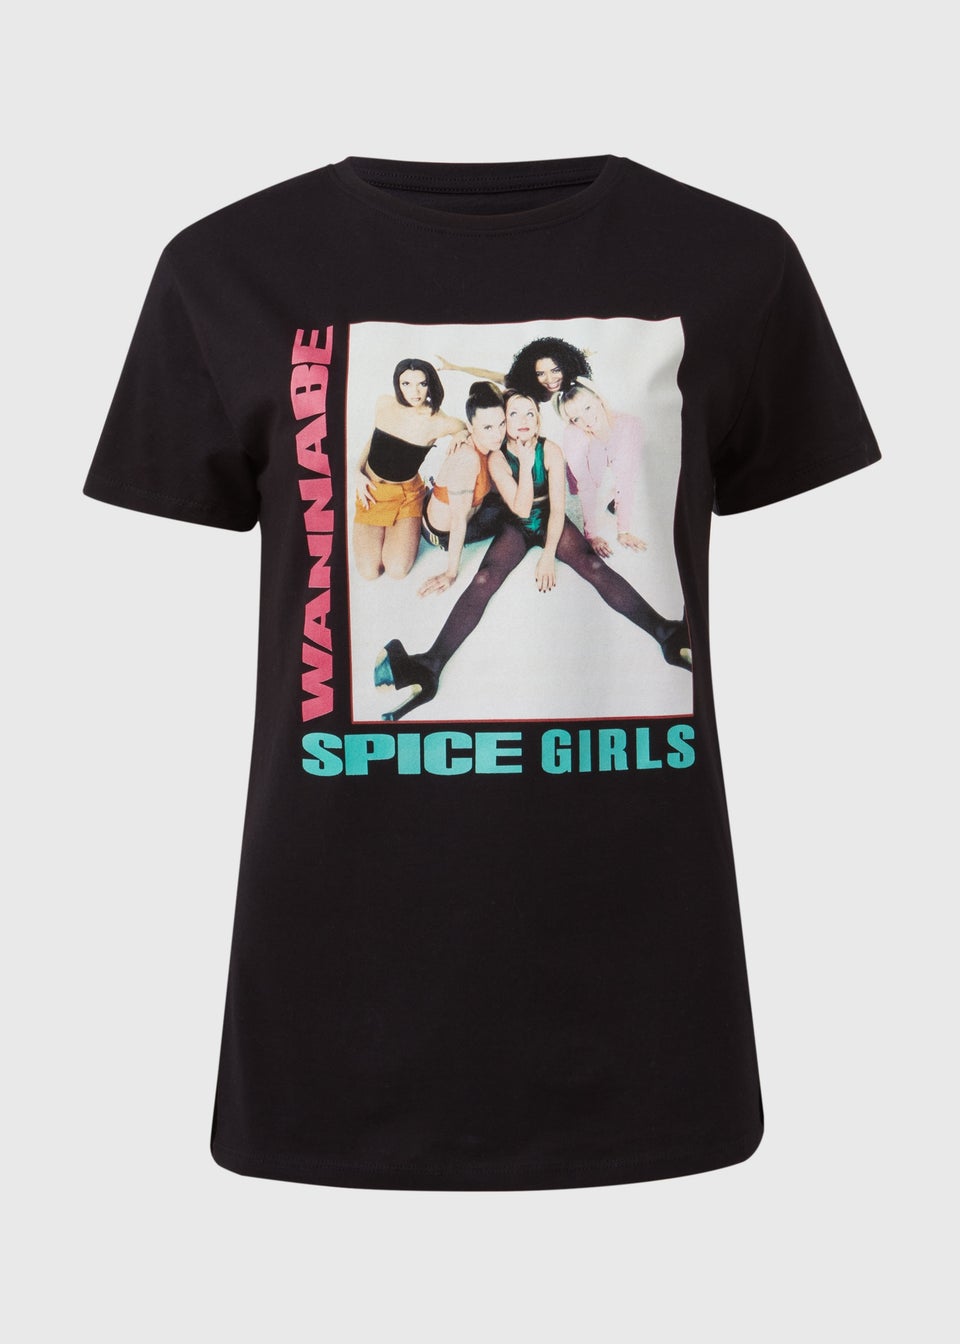 Spice Girls Black T-Shirt